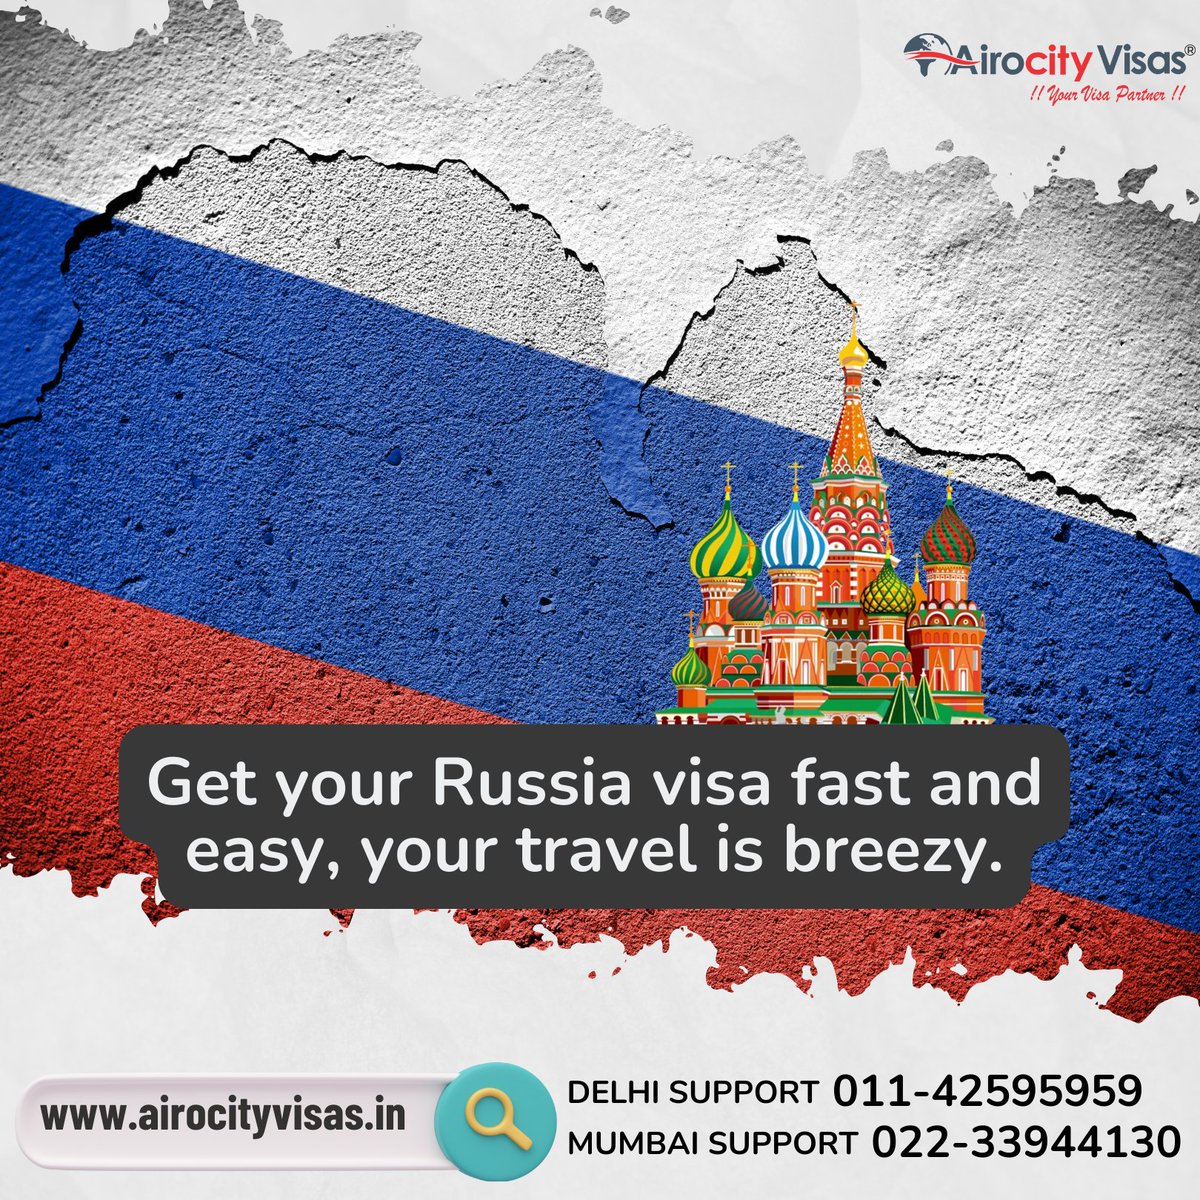 Get your Russia visa hassle-free with Airocity Visas!  #RussiaVisa #AirocityVisas #VisaServices #TravelRussia #VisaAssistance #SeamlessProcess #TravelWithEase #VisaExperts #ExploreRussia #VisaApplication #VisaSupport #TravelSimplified #VisaMadeEasy #RussiaAdventure